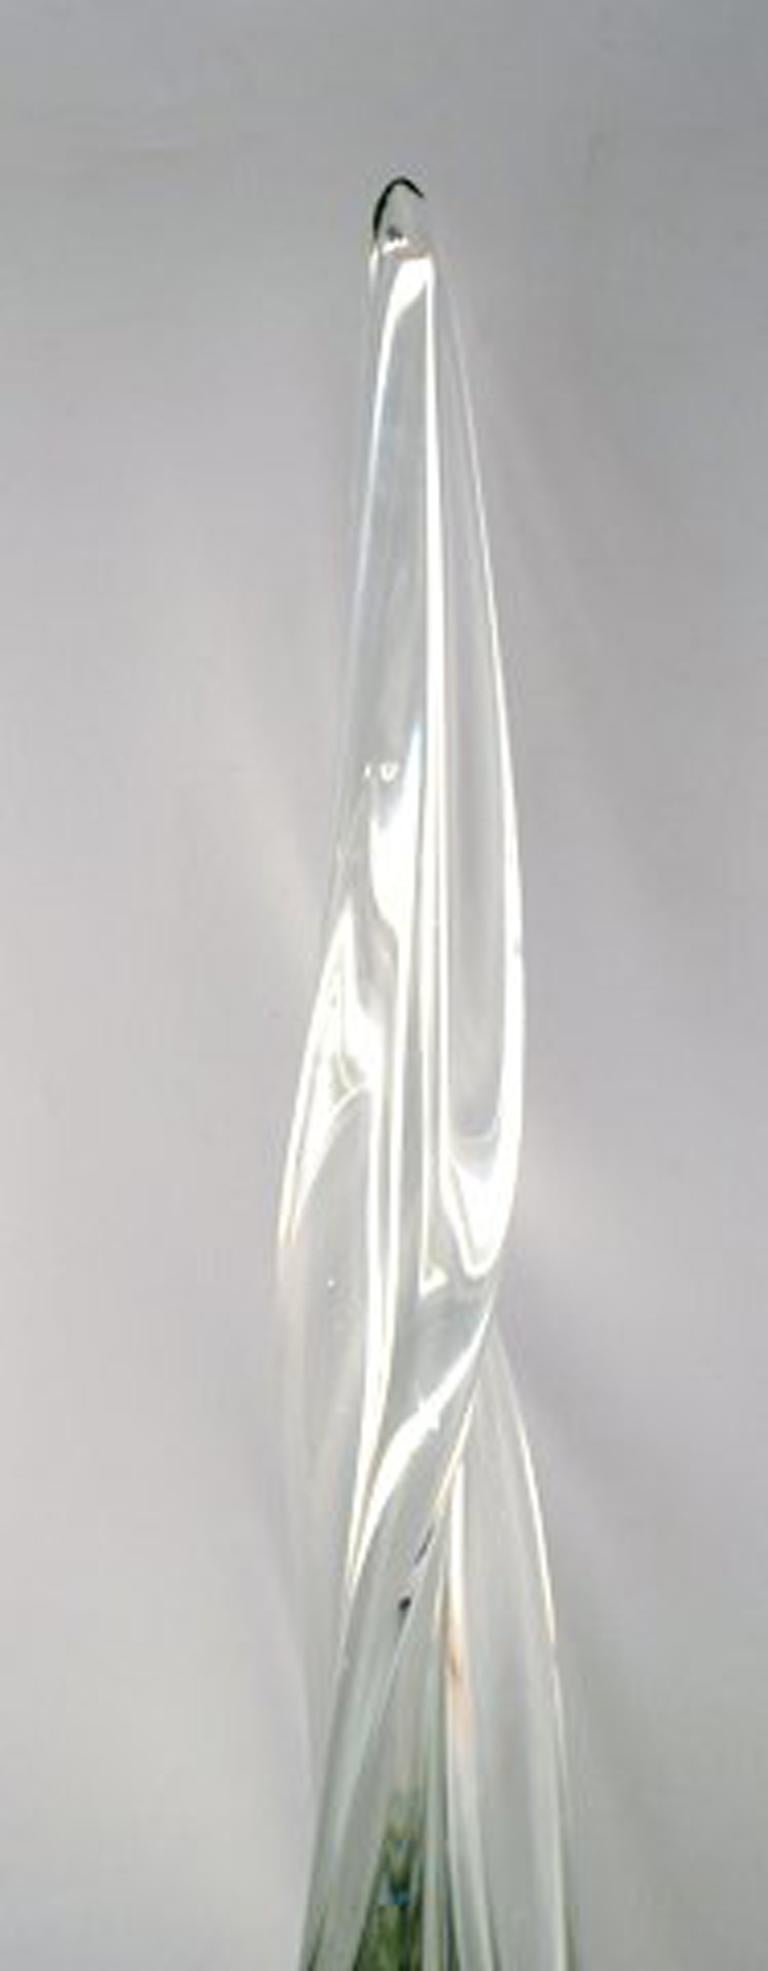 a. jablonski glass art